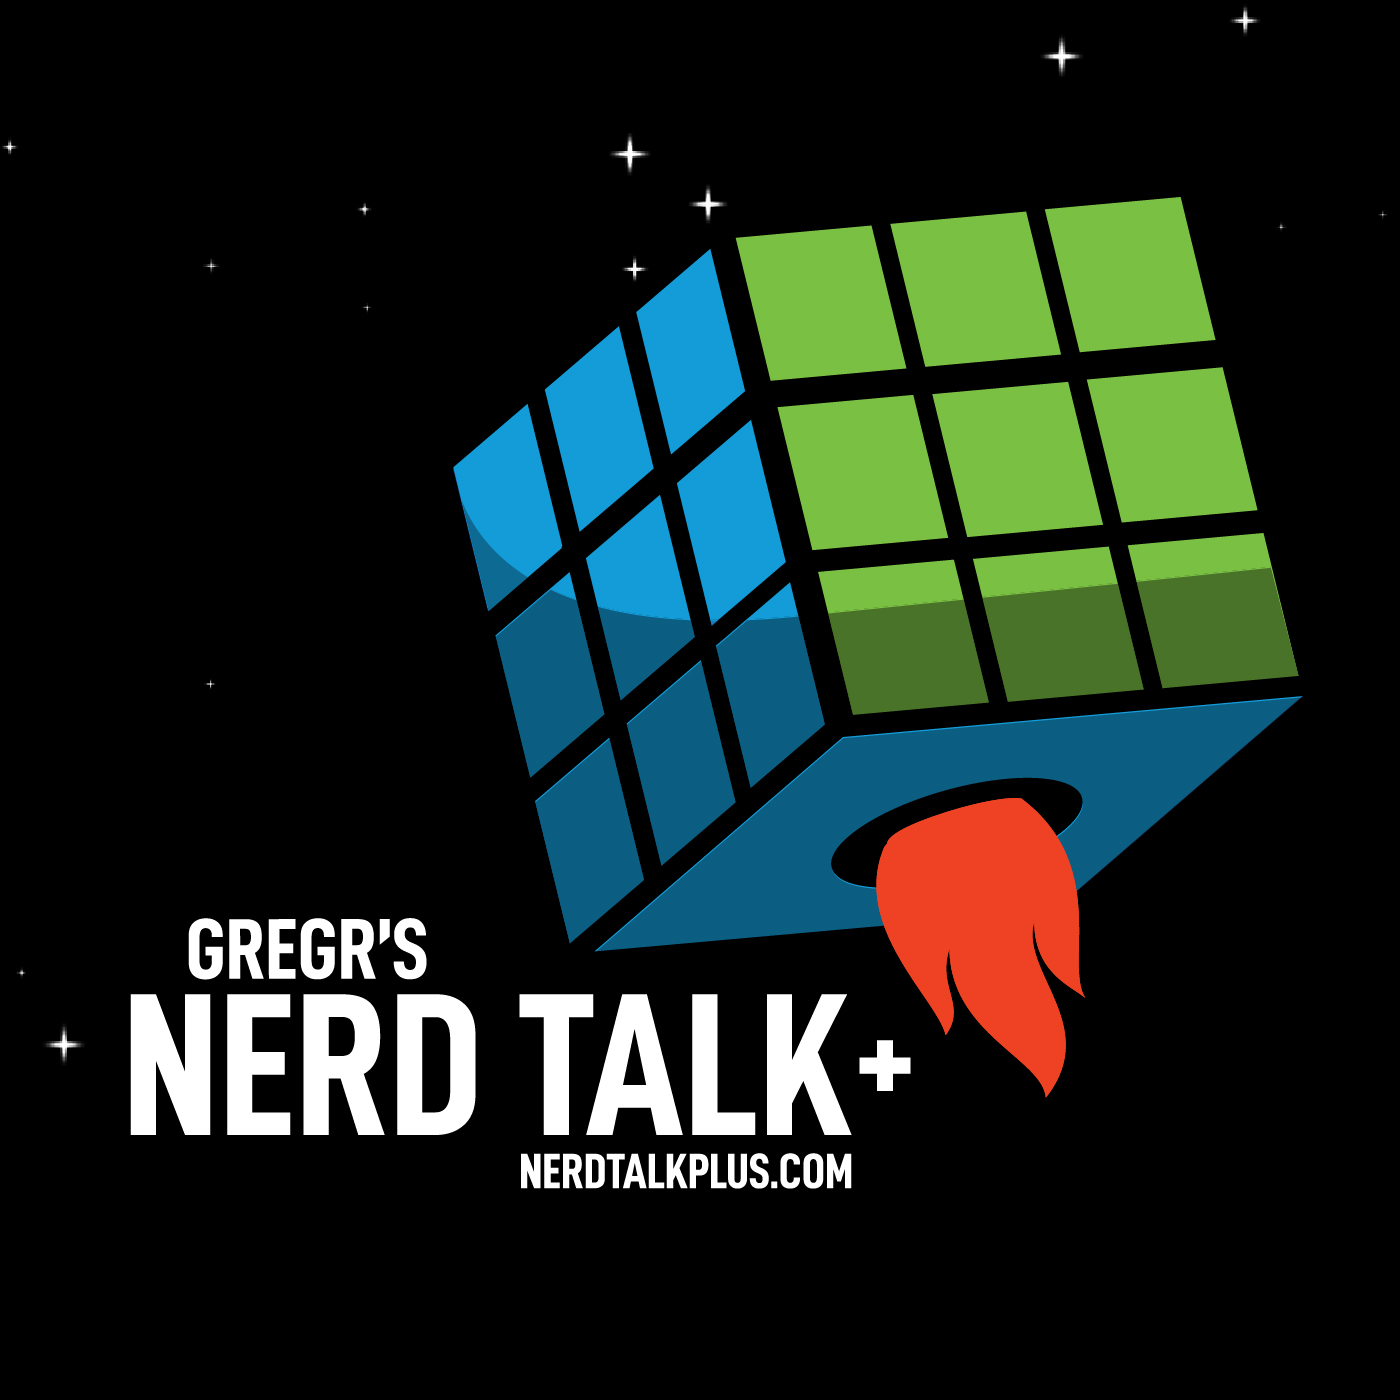 February 7, 2023 - Nerd Talk+